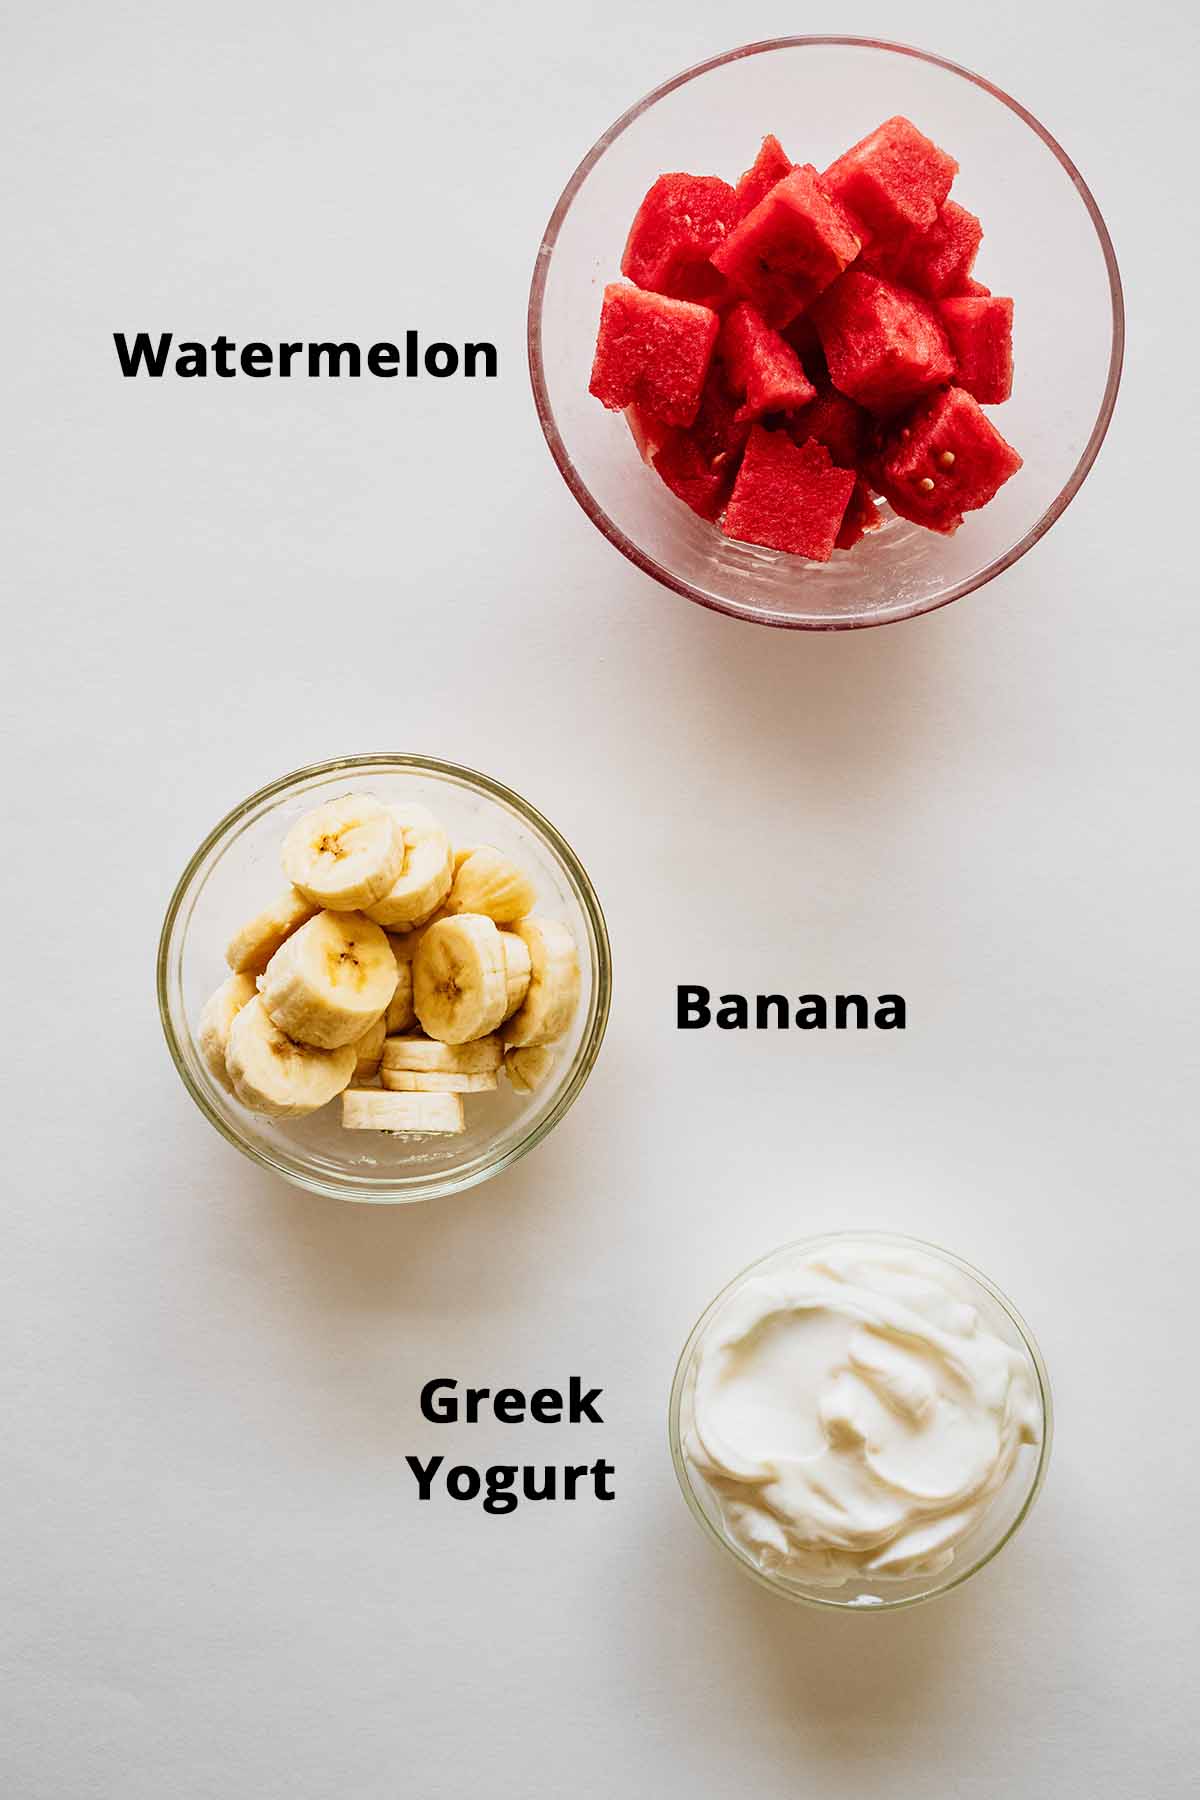 Watermelon banana smoothie ingredients